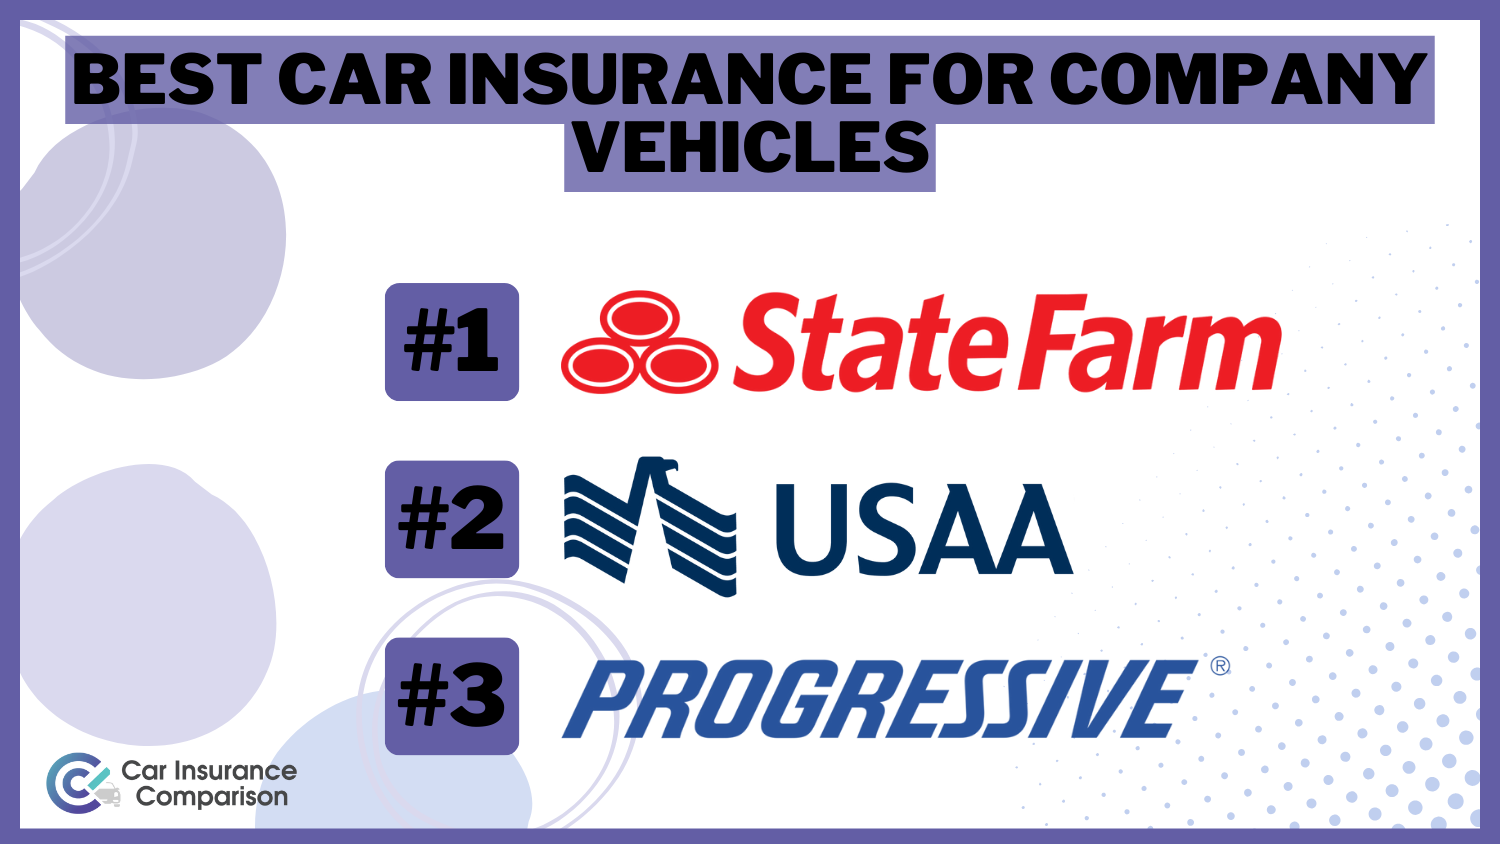 State Farm, USAA, Progressive: Best Car Insurance for Company Vehicles